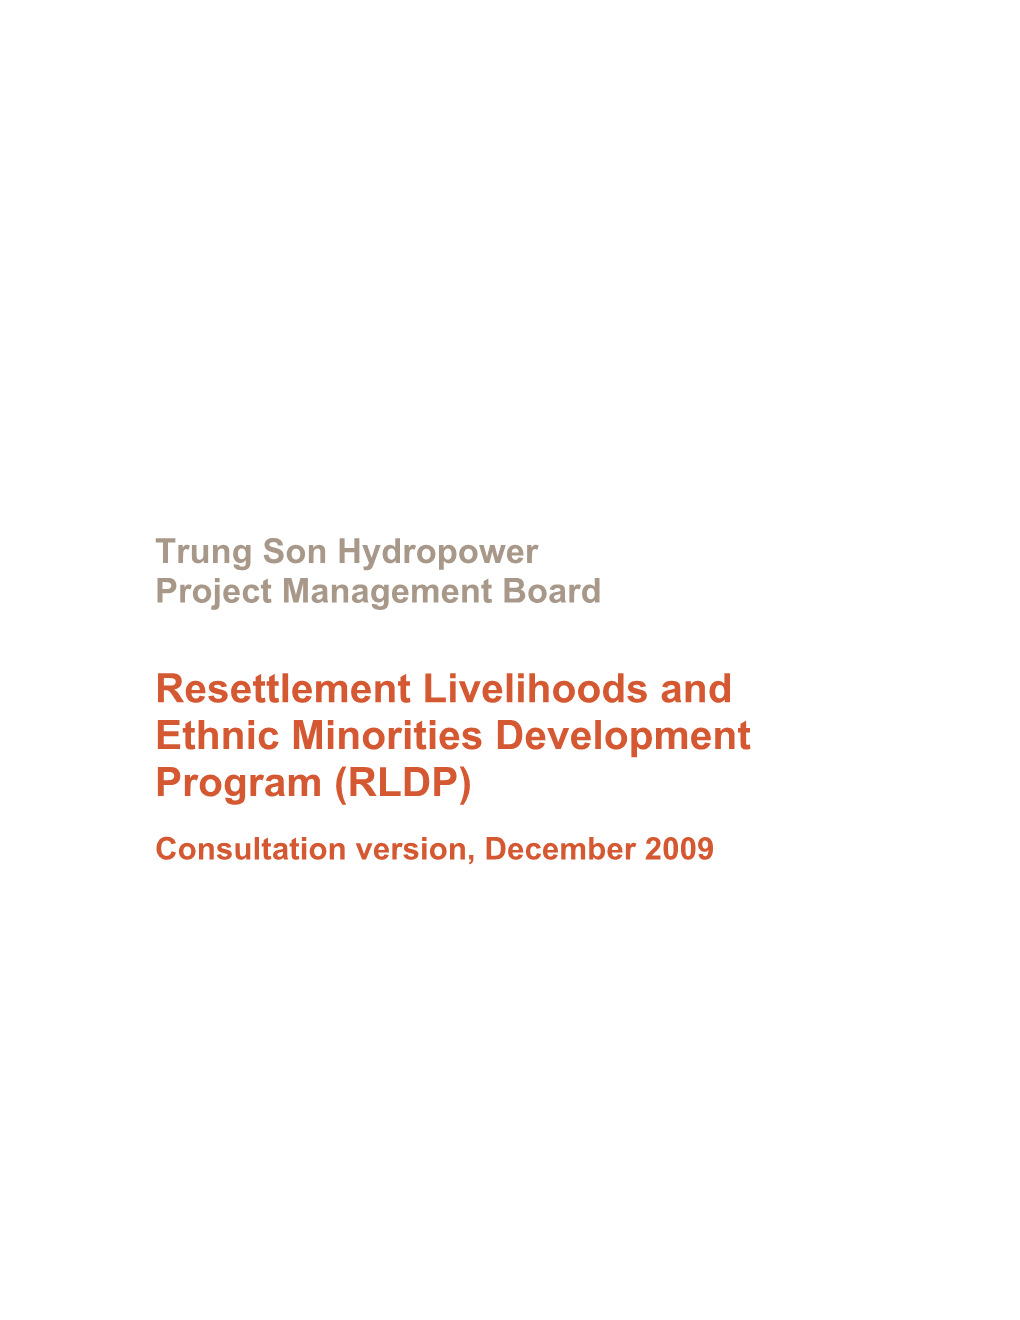 Resettlement Livelihoods and Ethnic Minorities Development Program (RLDP)